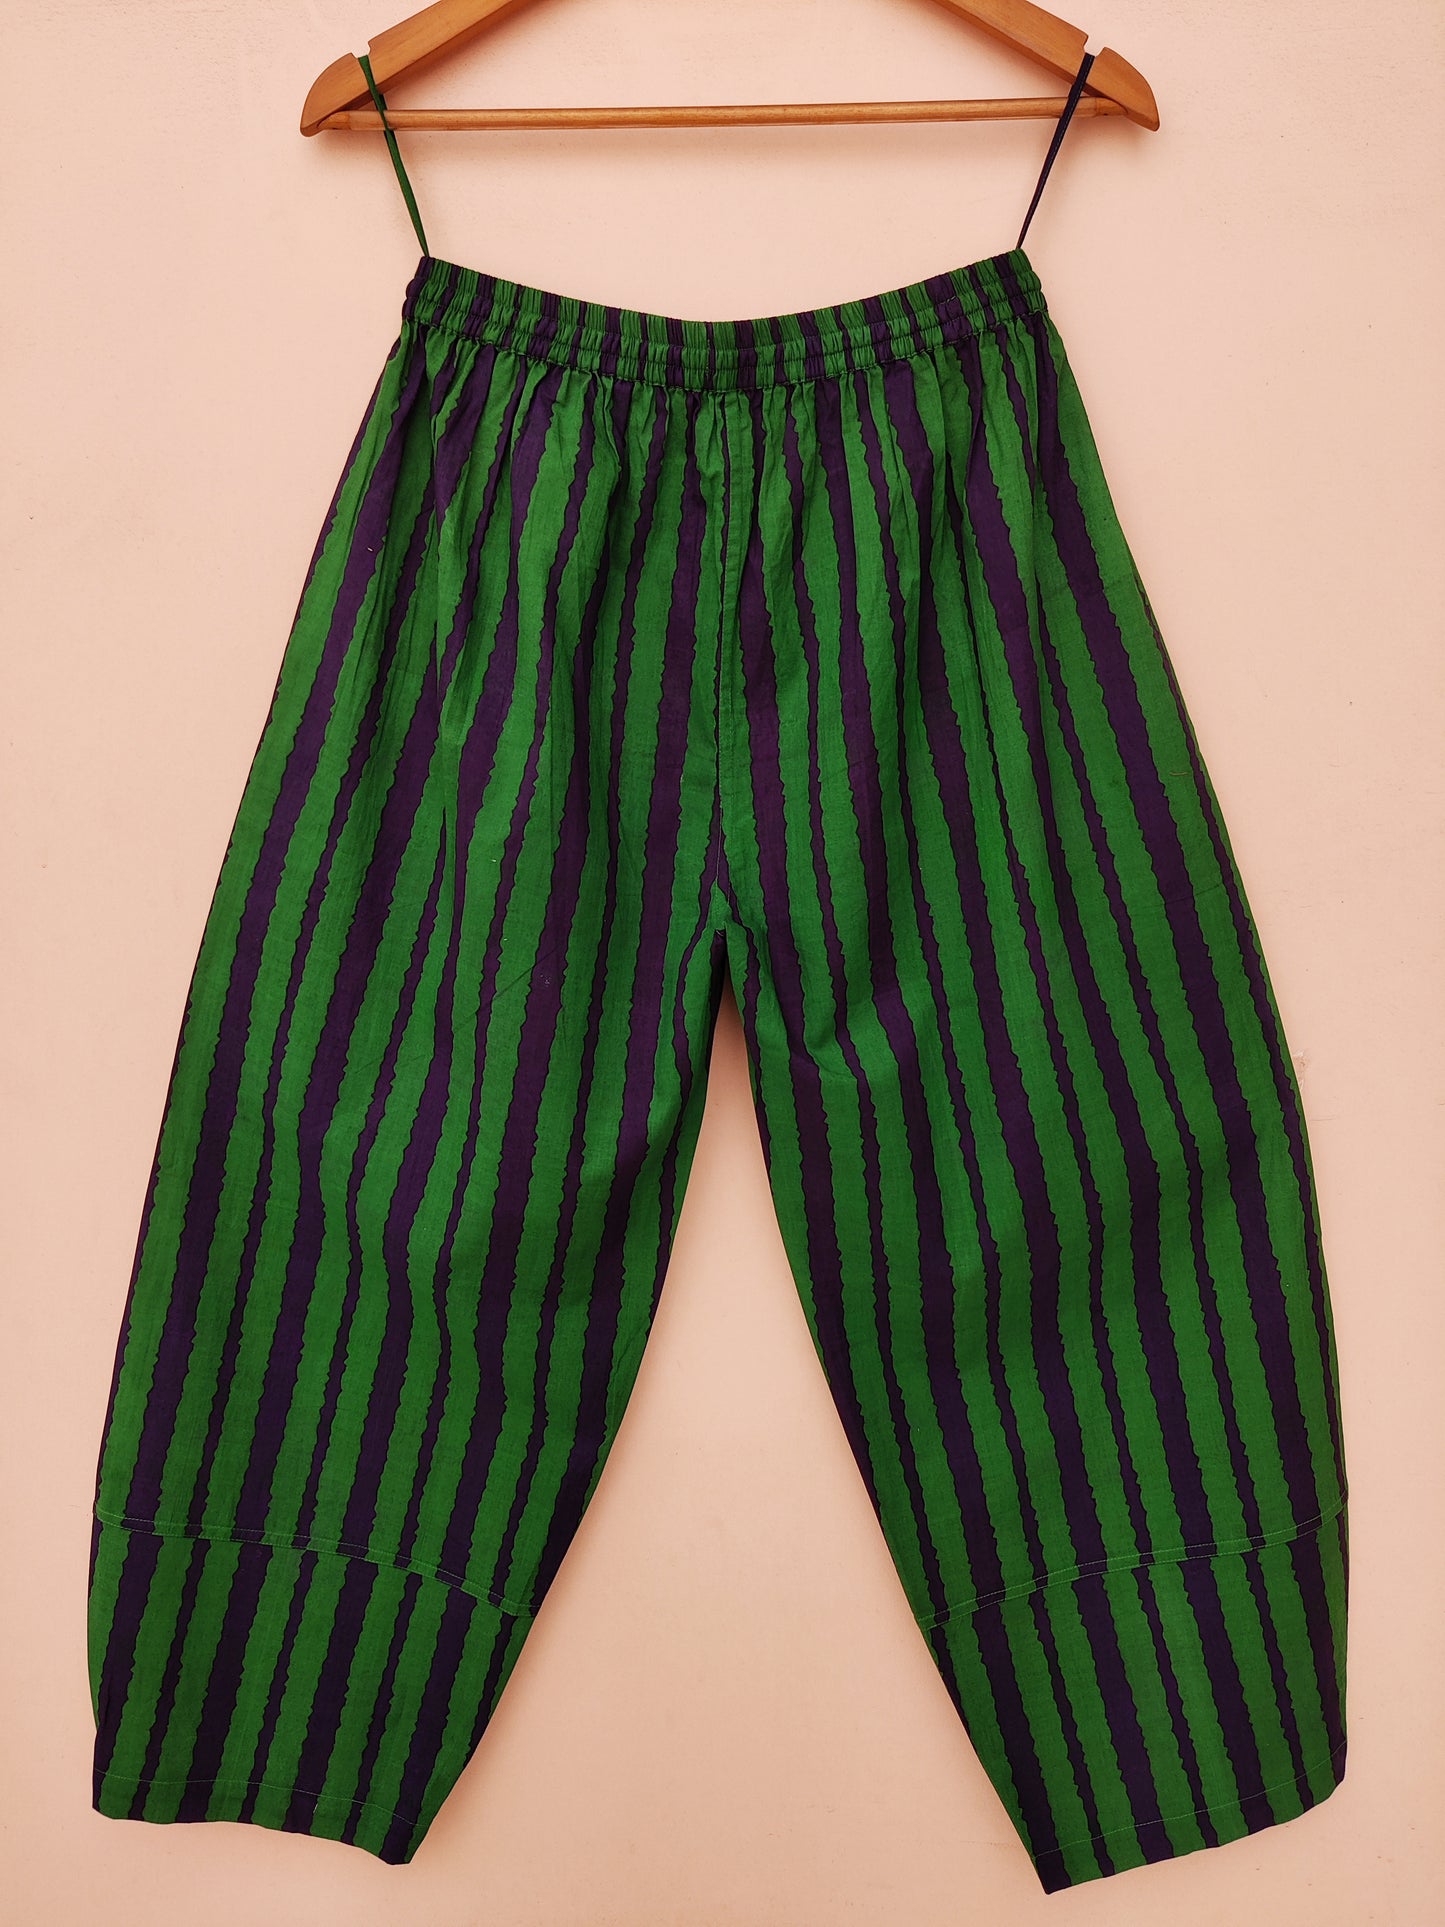 Hasu Linen Placket Tunic & Printed Sienna Fit Pants